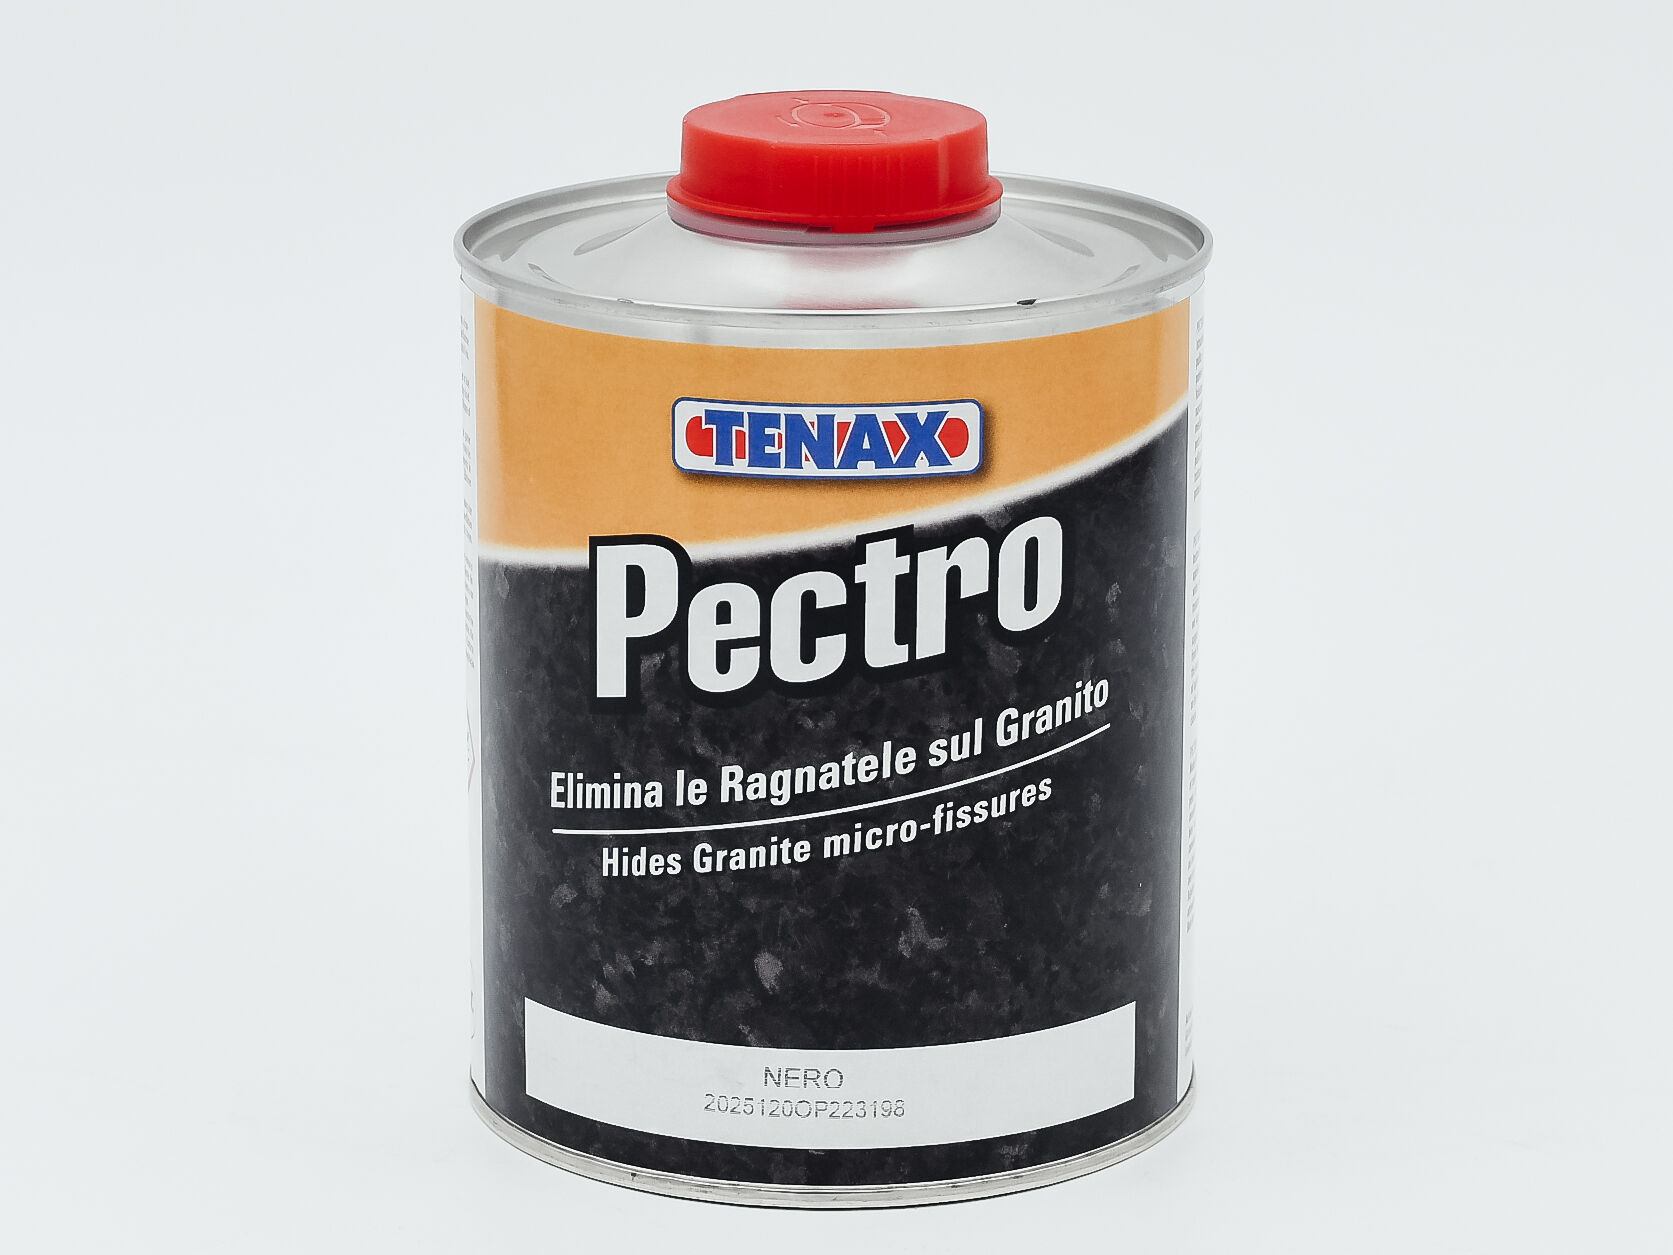 Пропитка Pectro для устранения микротрещин (защита/усиление цвета) 1л Tenax